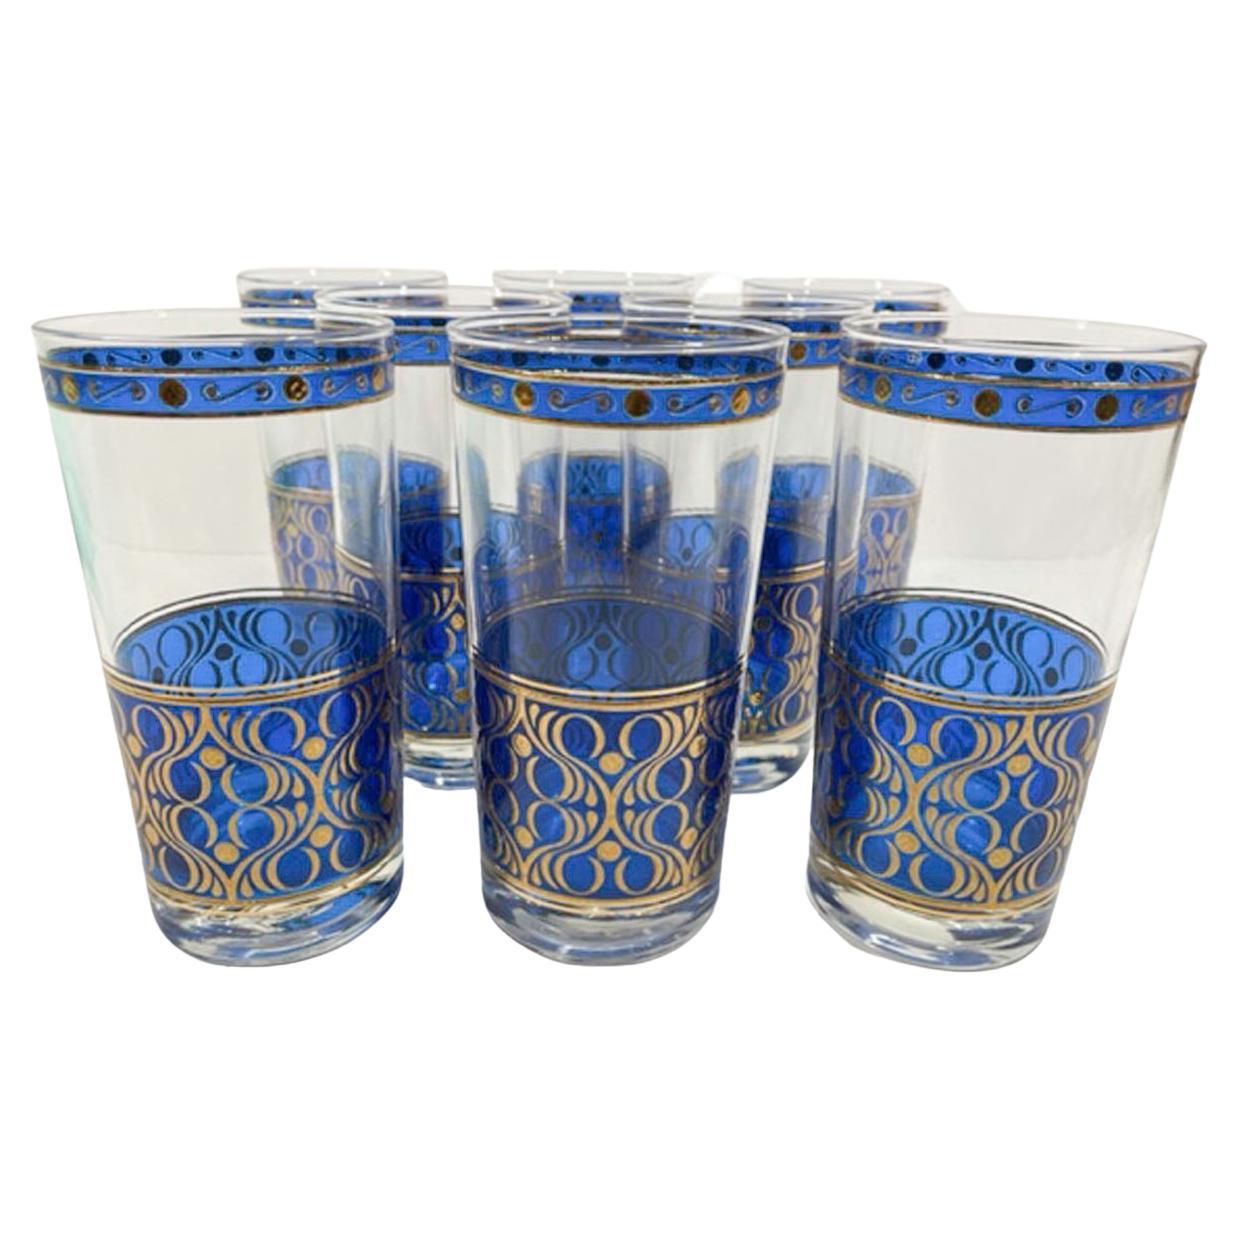 Eight Vintage Highball Glasses with 22k Gold over Translucent Blue Enamel